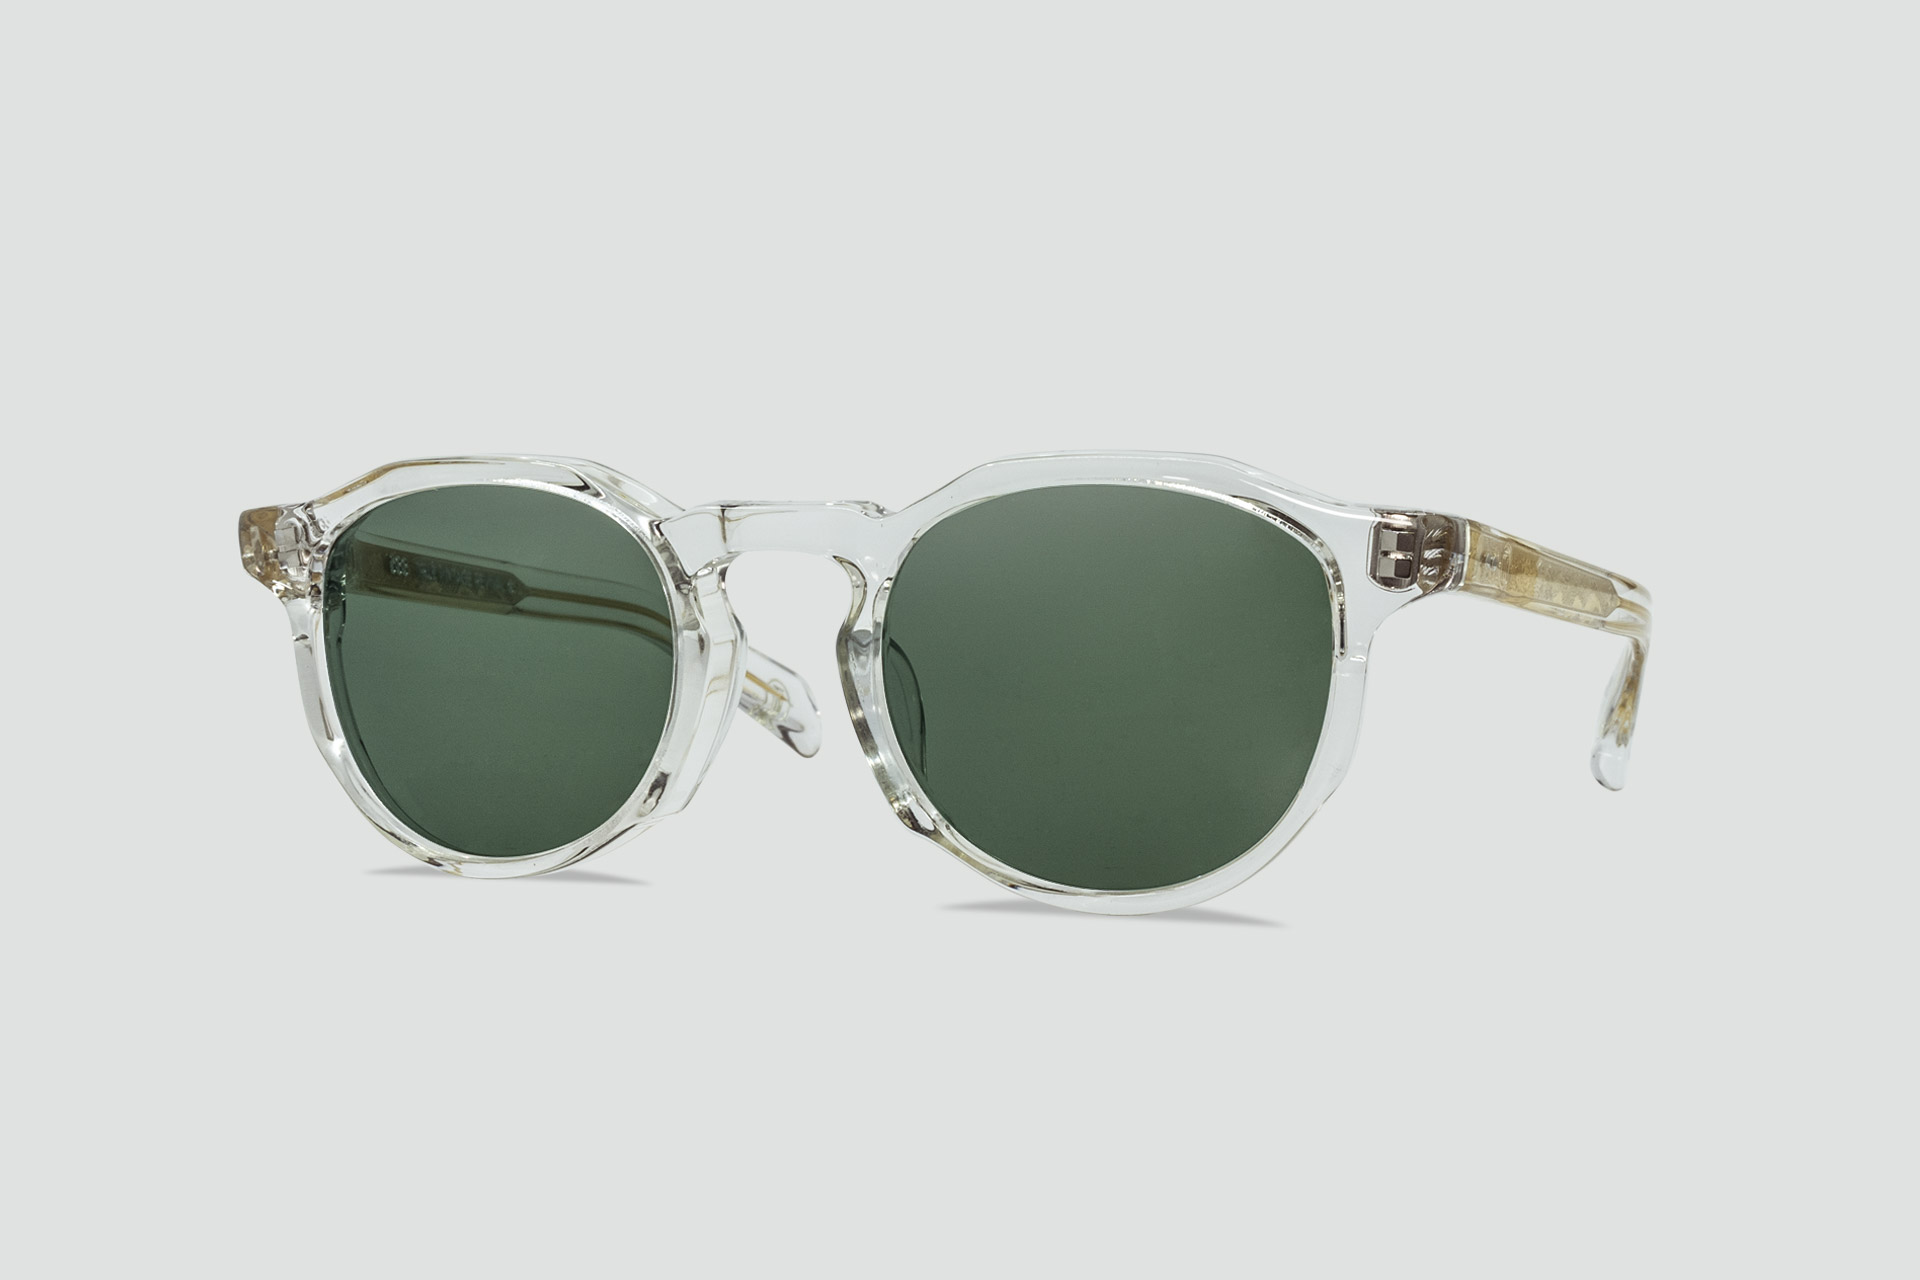 Stylish Half Rimless Aviator Pattern Premium Quality Gold Black Sunglasses For Men And Women-Unique and Classy